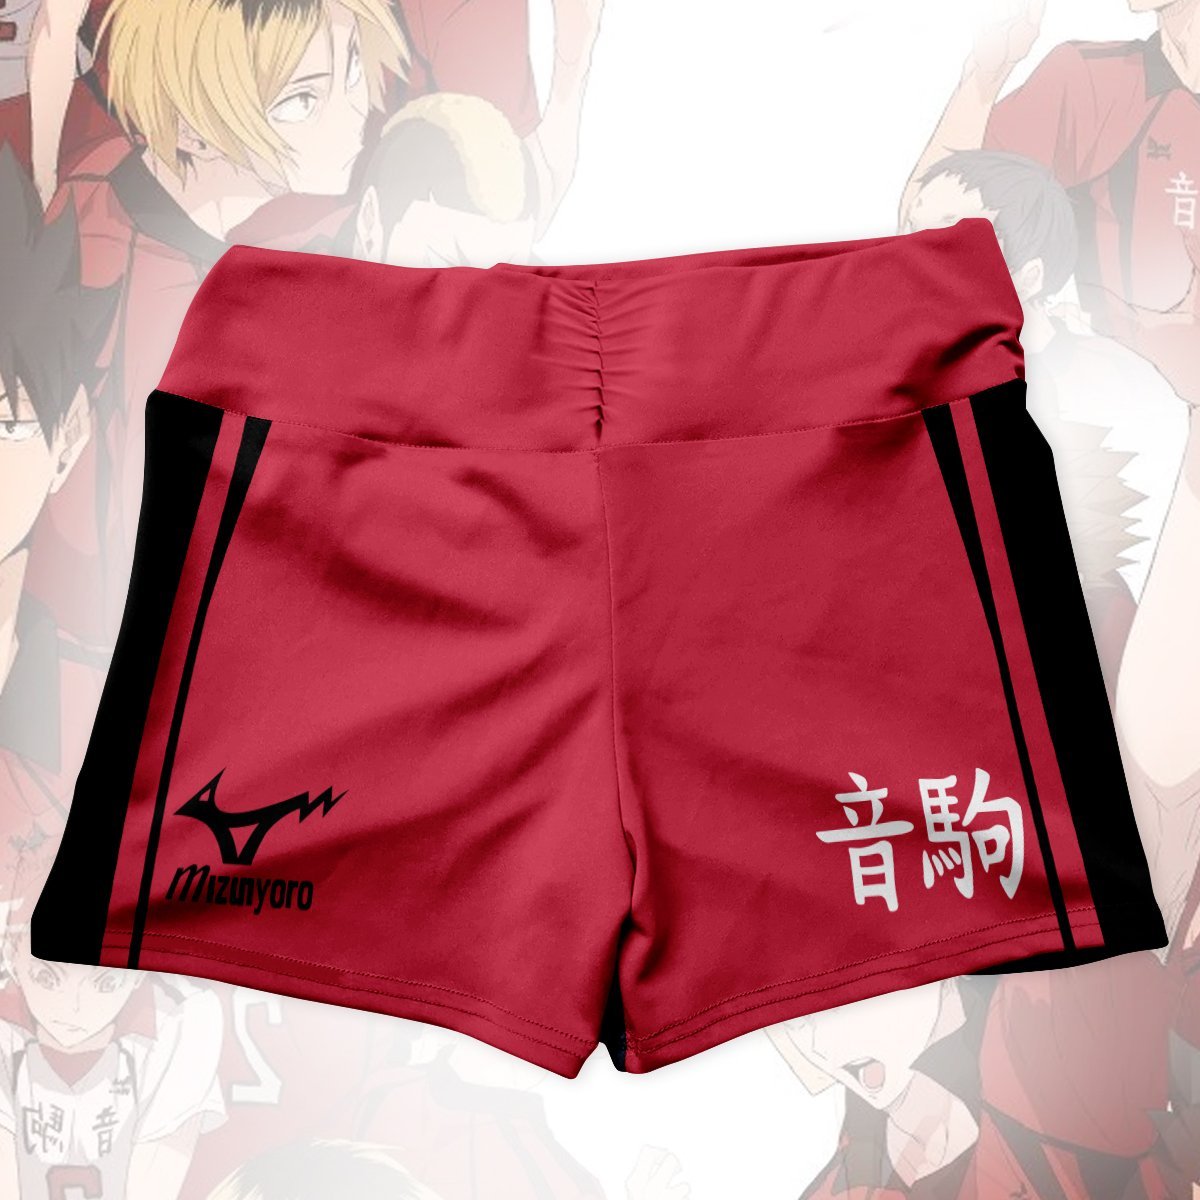 team nekoma active wear set 368291 - Anime Swimsuits